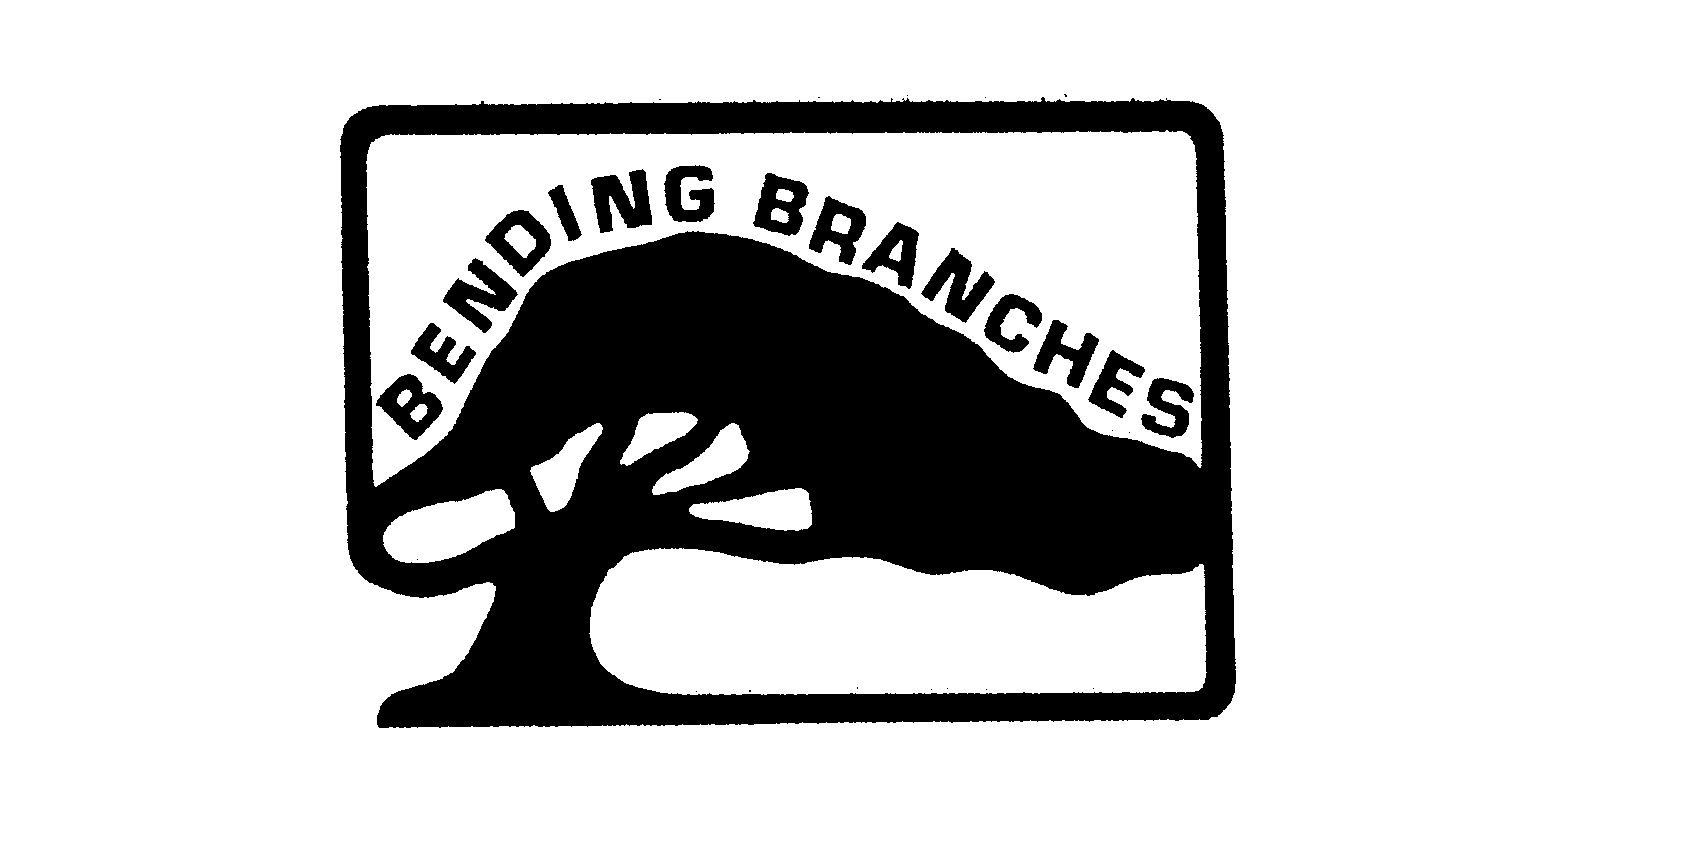 Trademark Logo BENDING BRANCHES